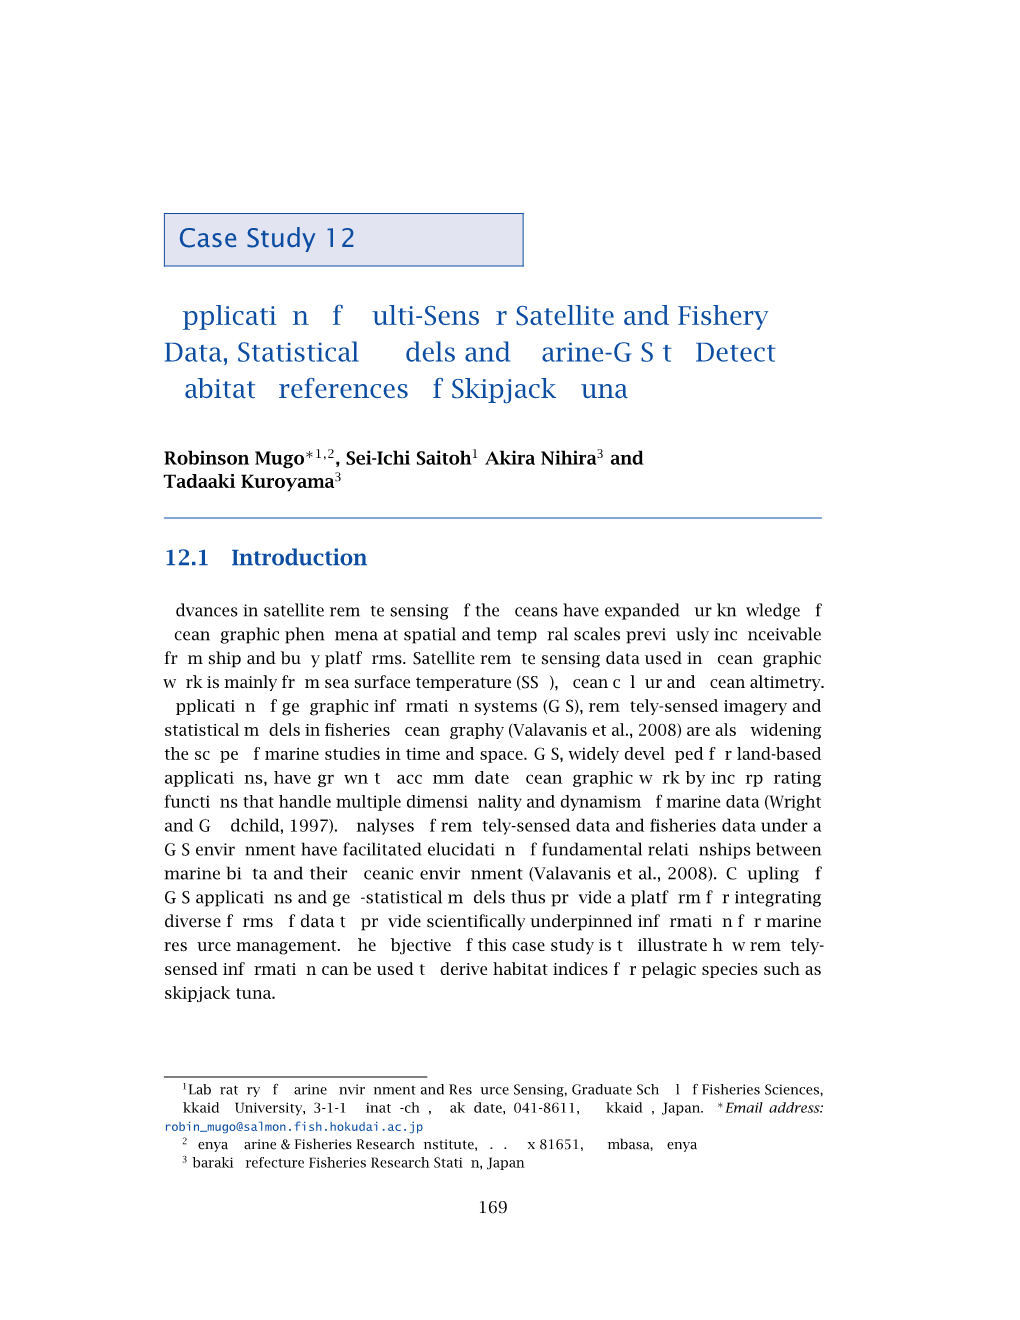 Case Study 12 Application of Multi-Sensor Satellite and Fishery